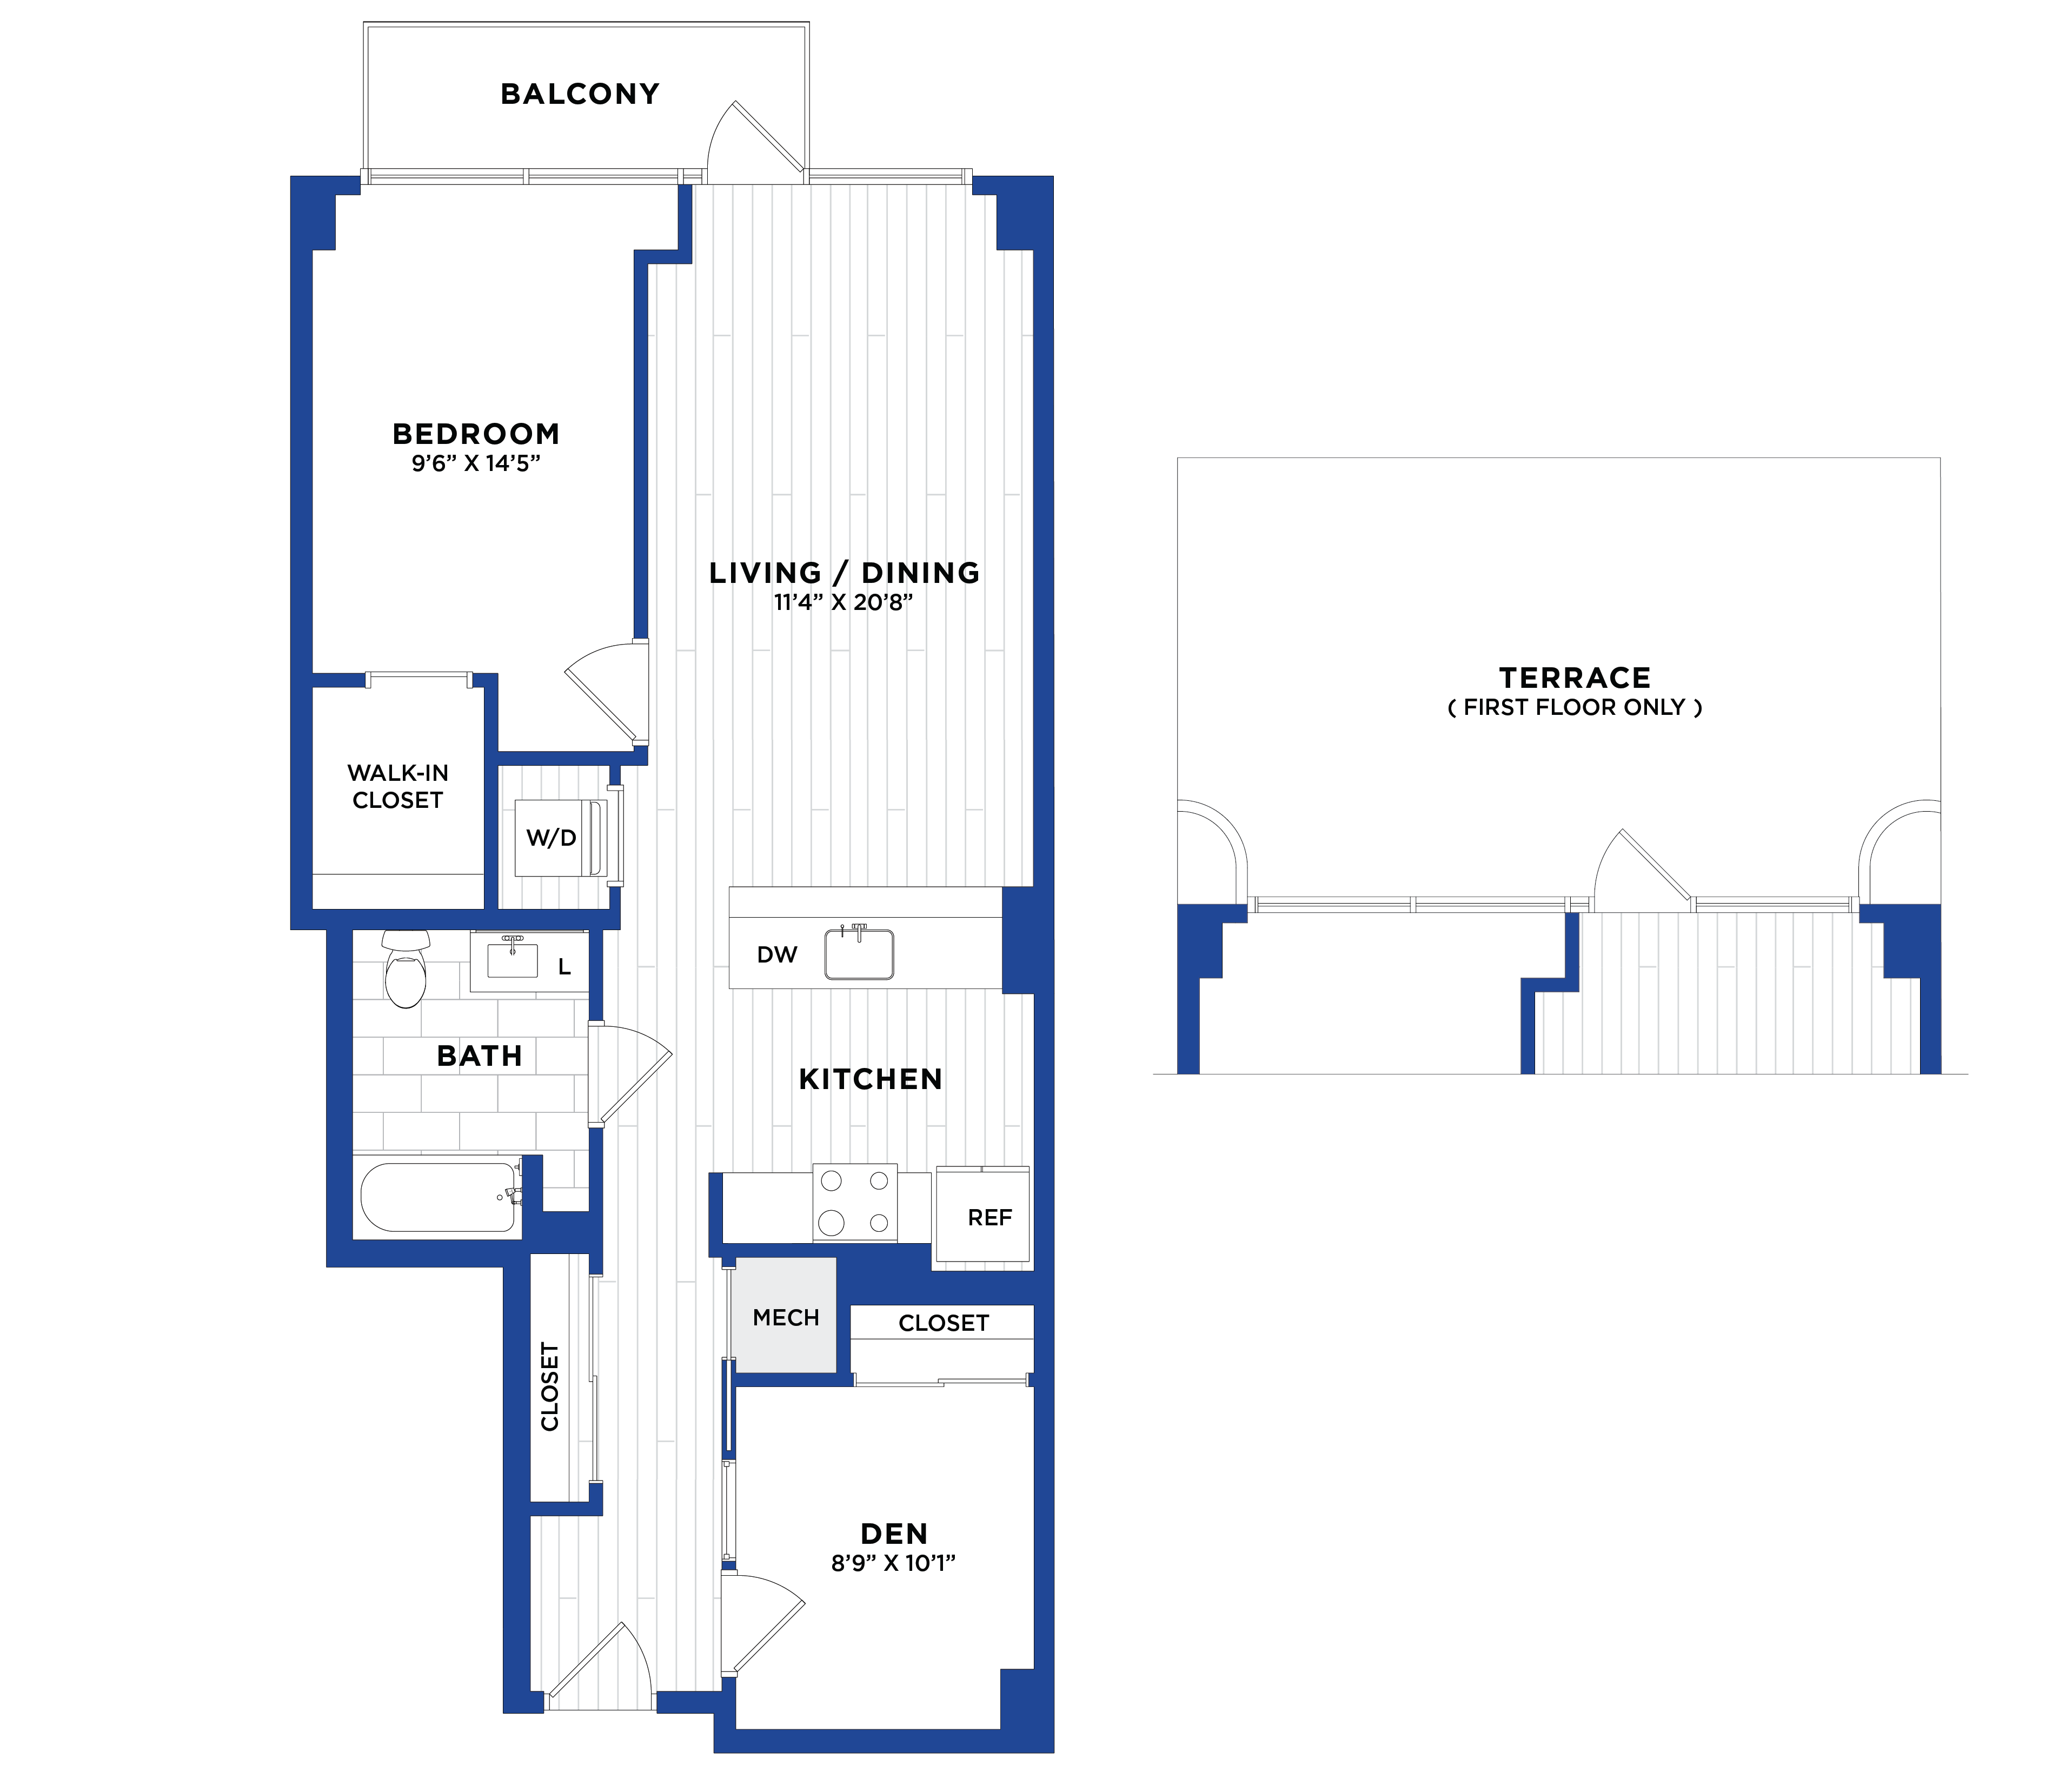 Apartment 0608 floorplan